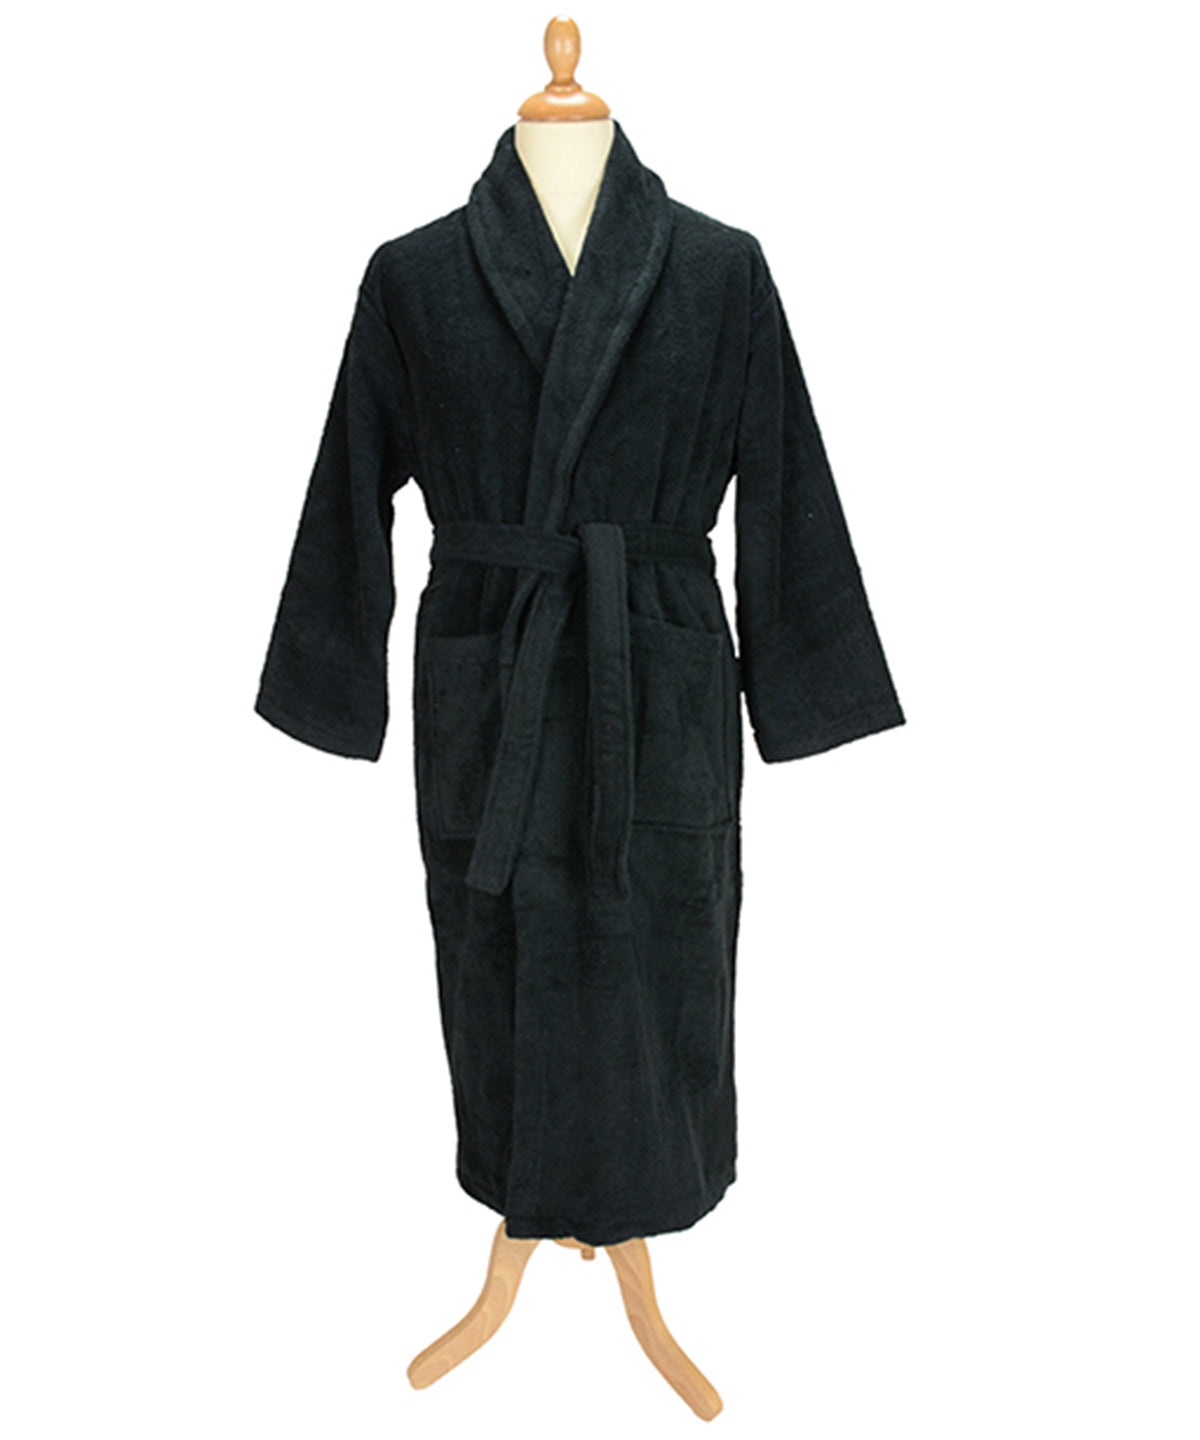 Personalised Robes - Light Grey A&R Towels ARTG® Bath robe with shawl collar